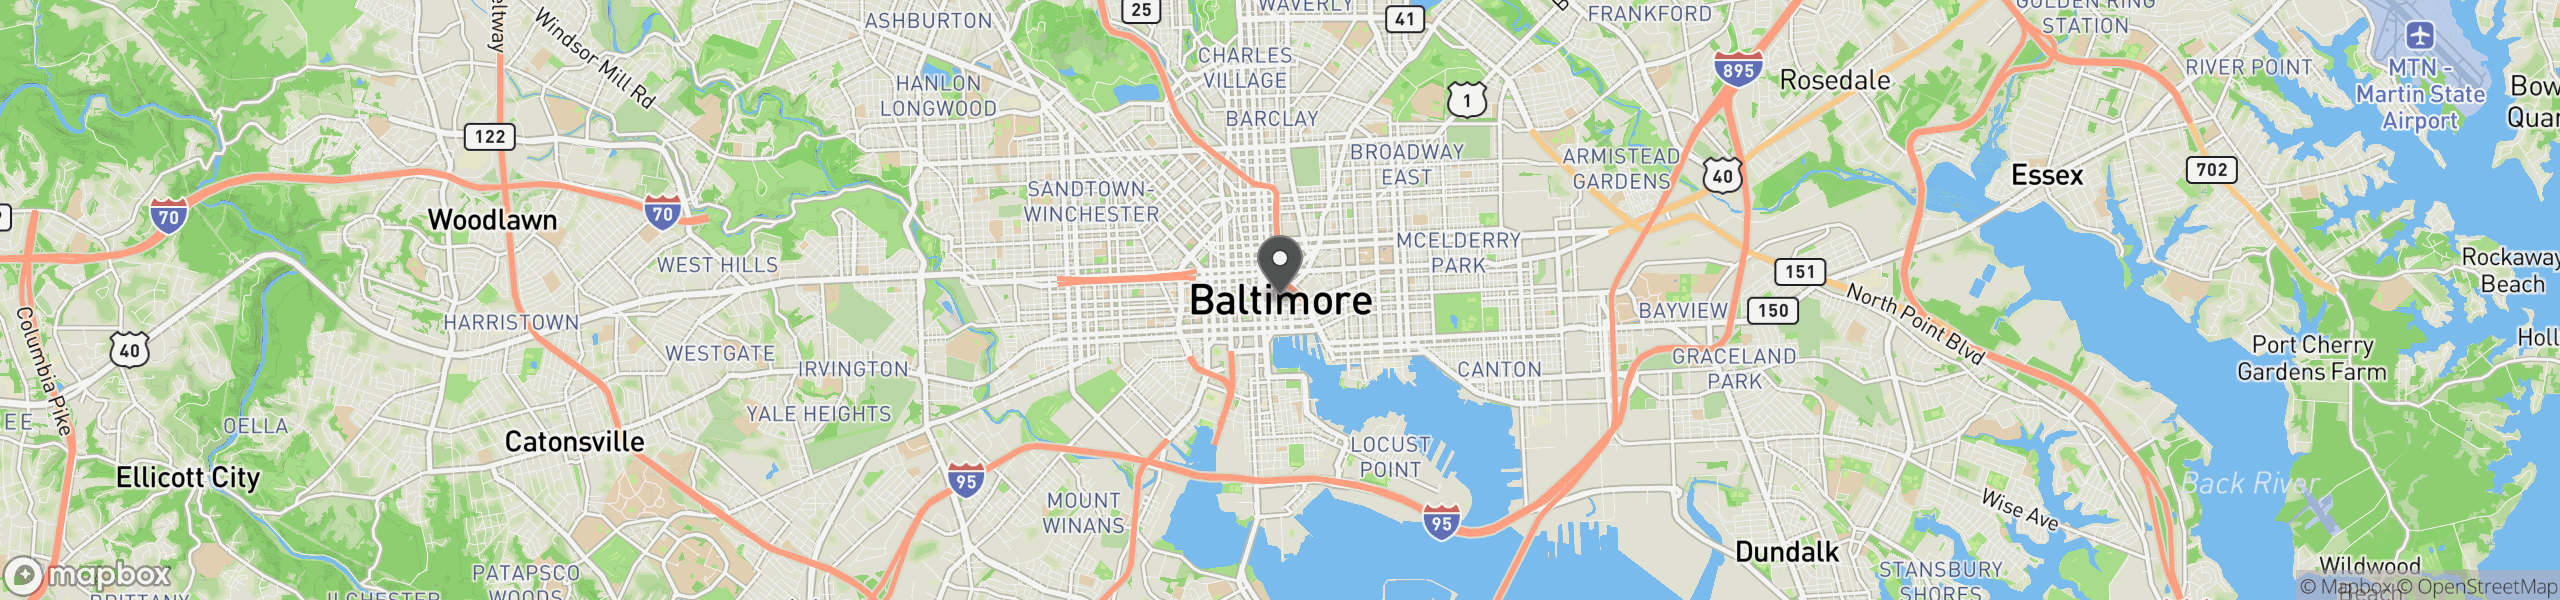 Baltimore, MD 21233